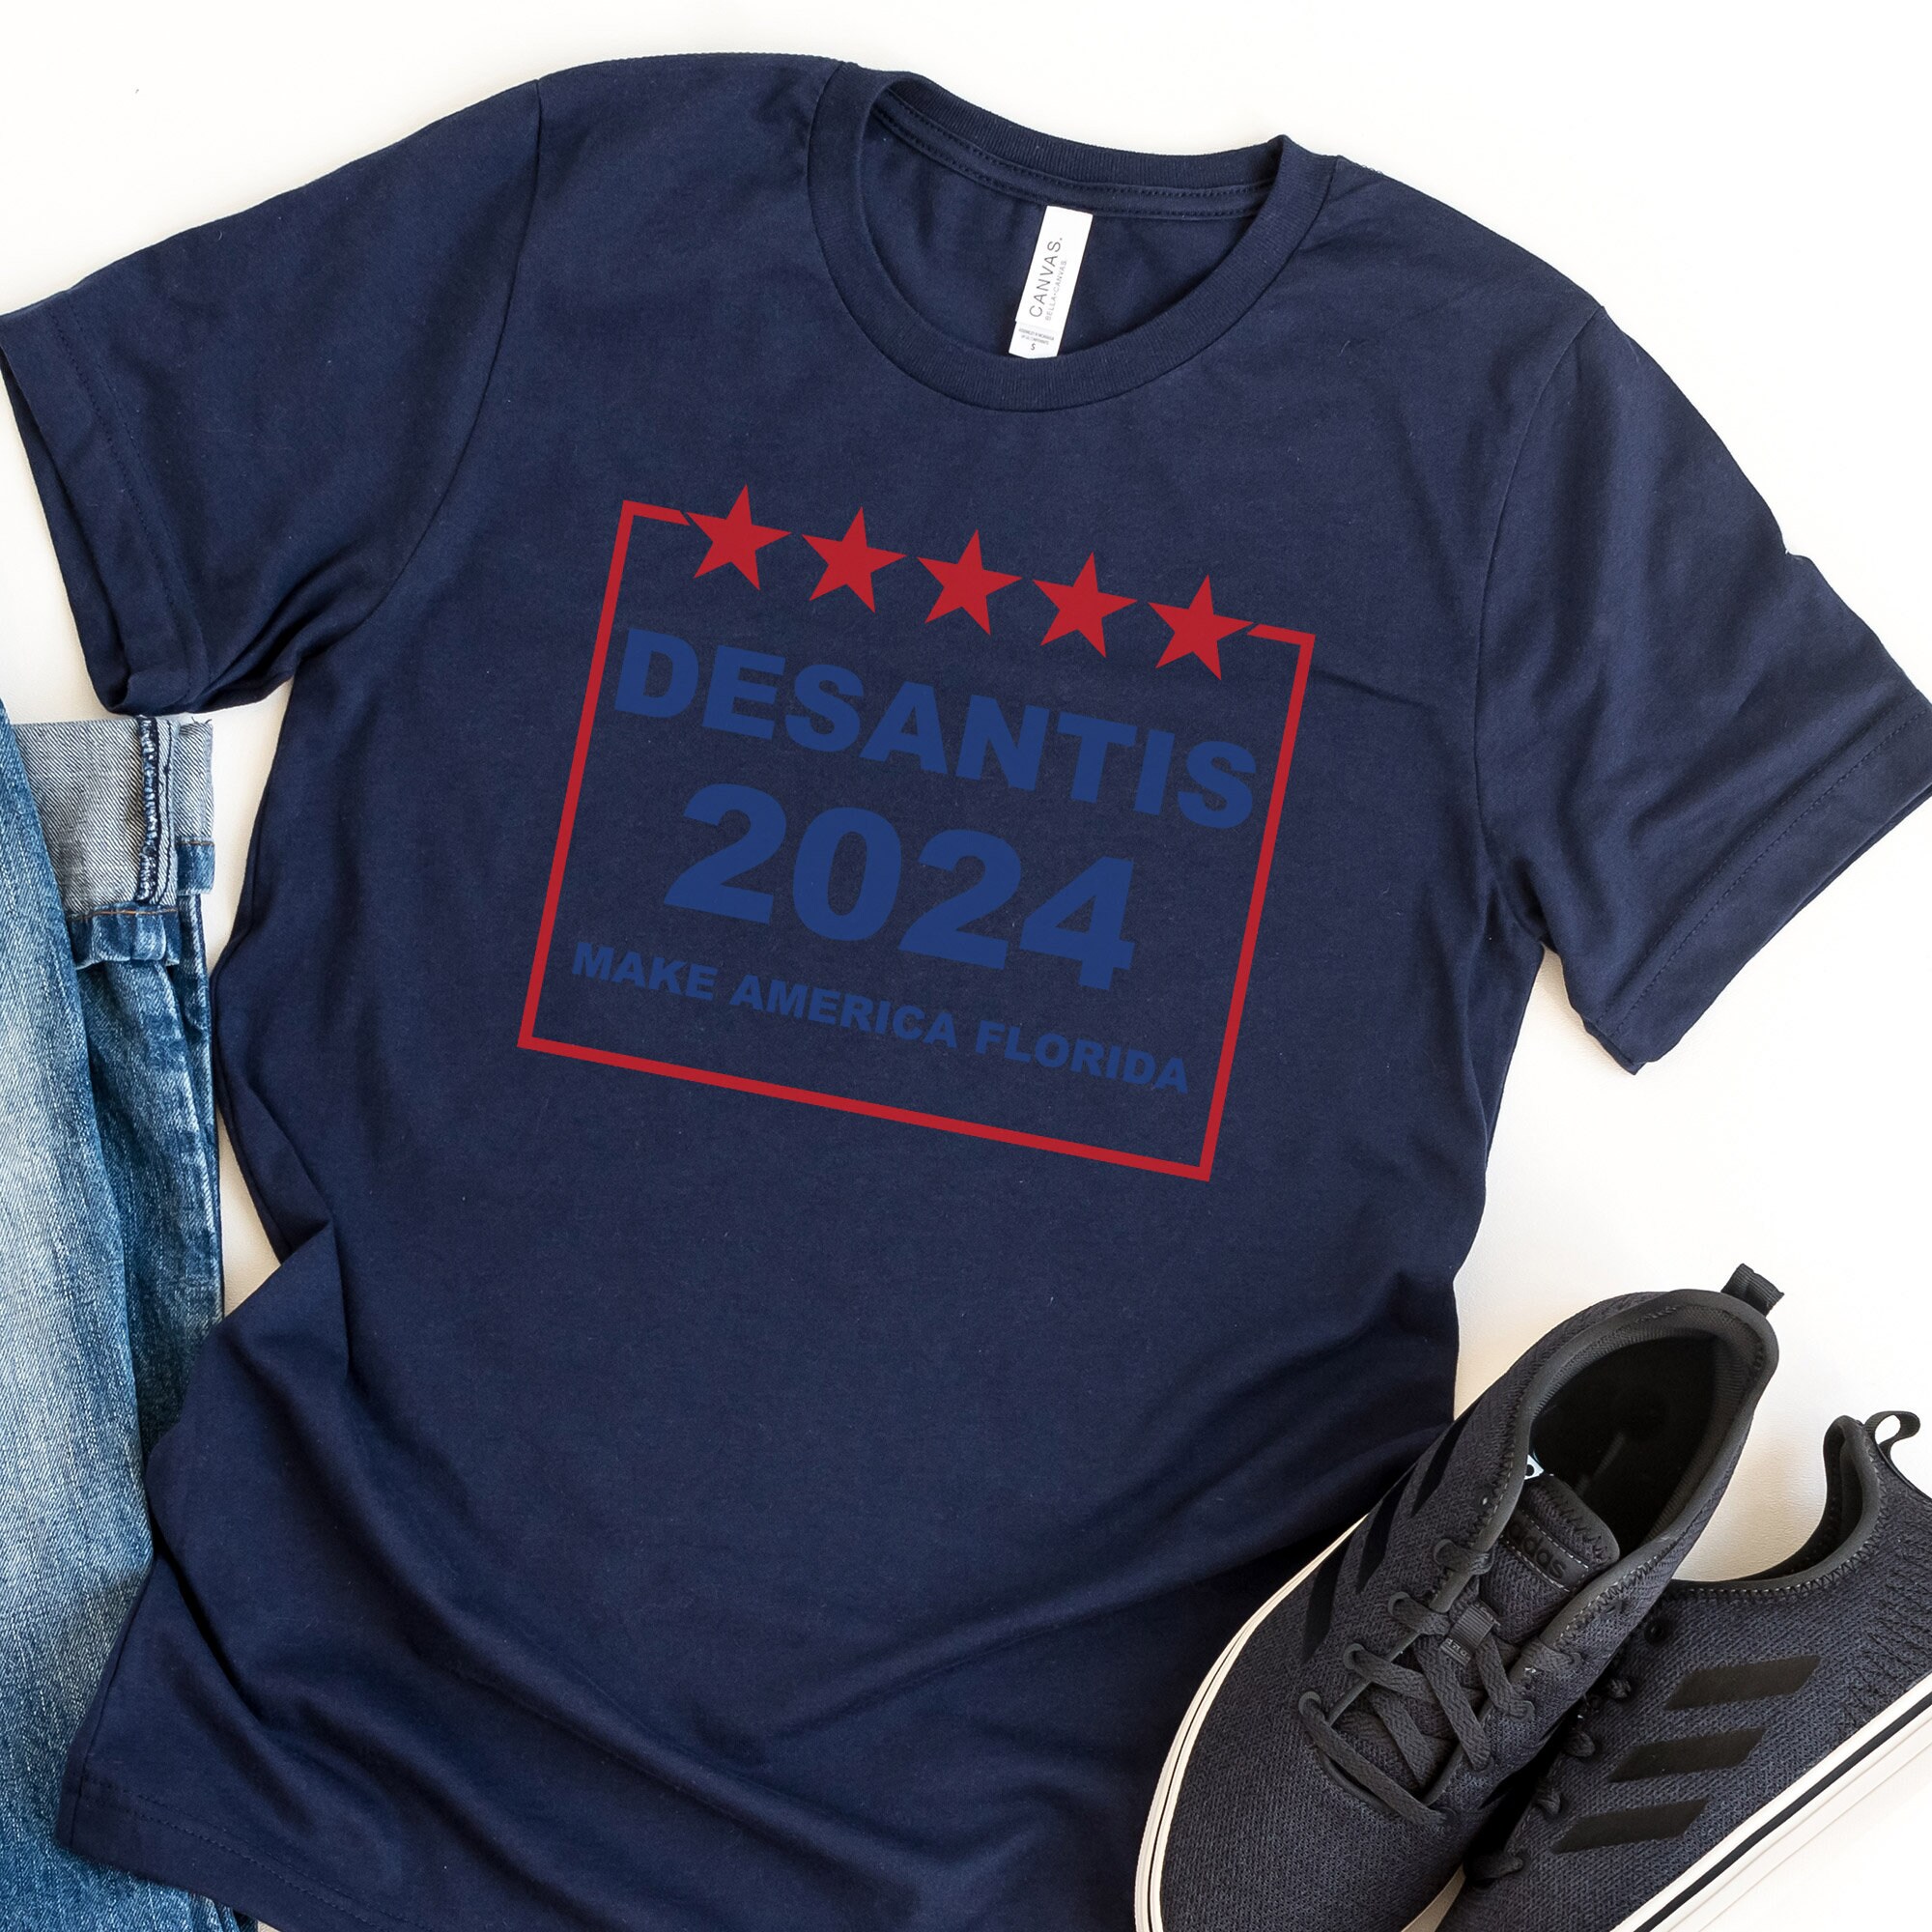 DeSantis 2024, Conservative Tee, Republican T-Shirt